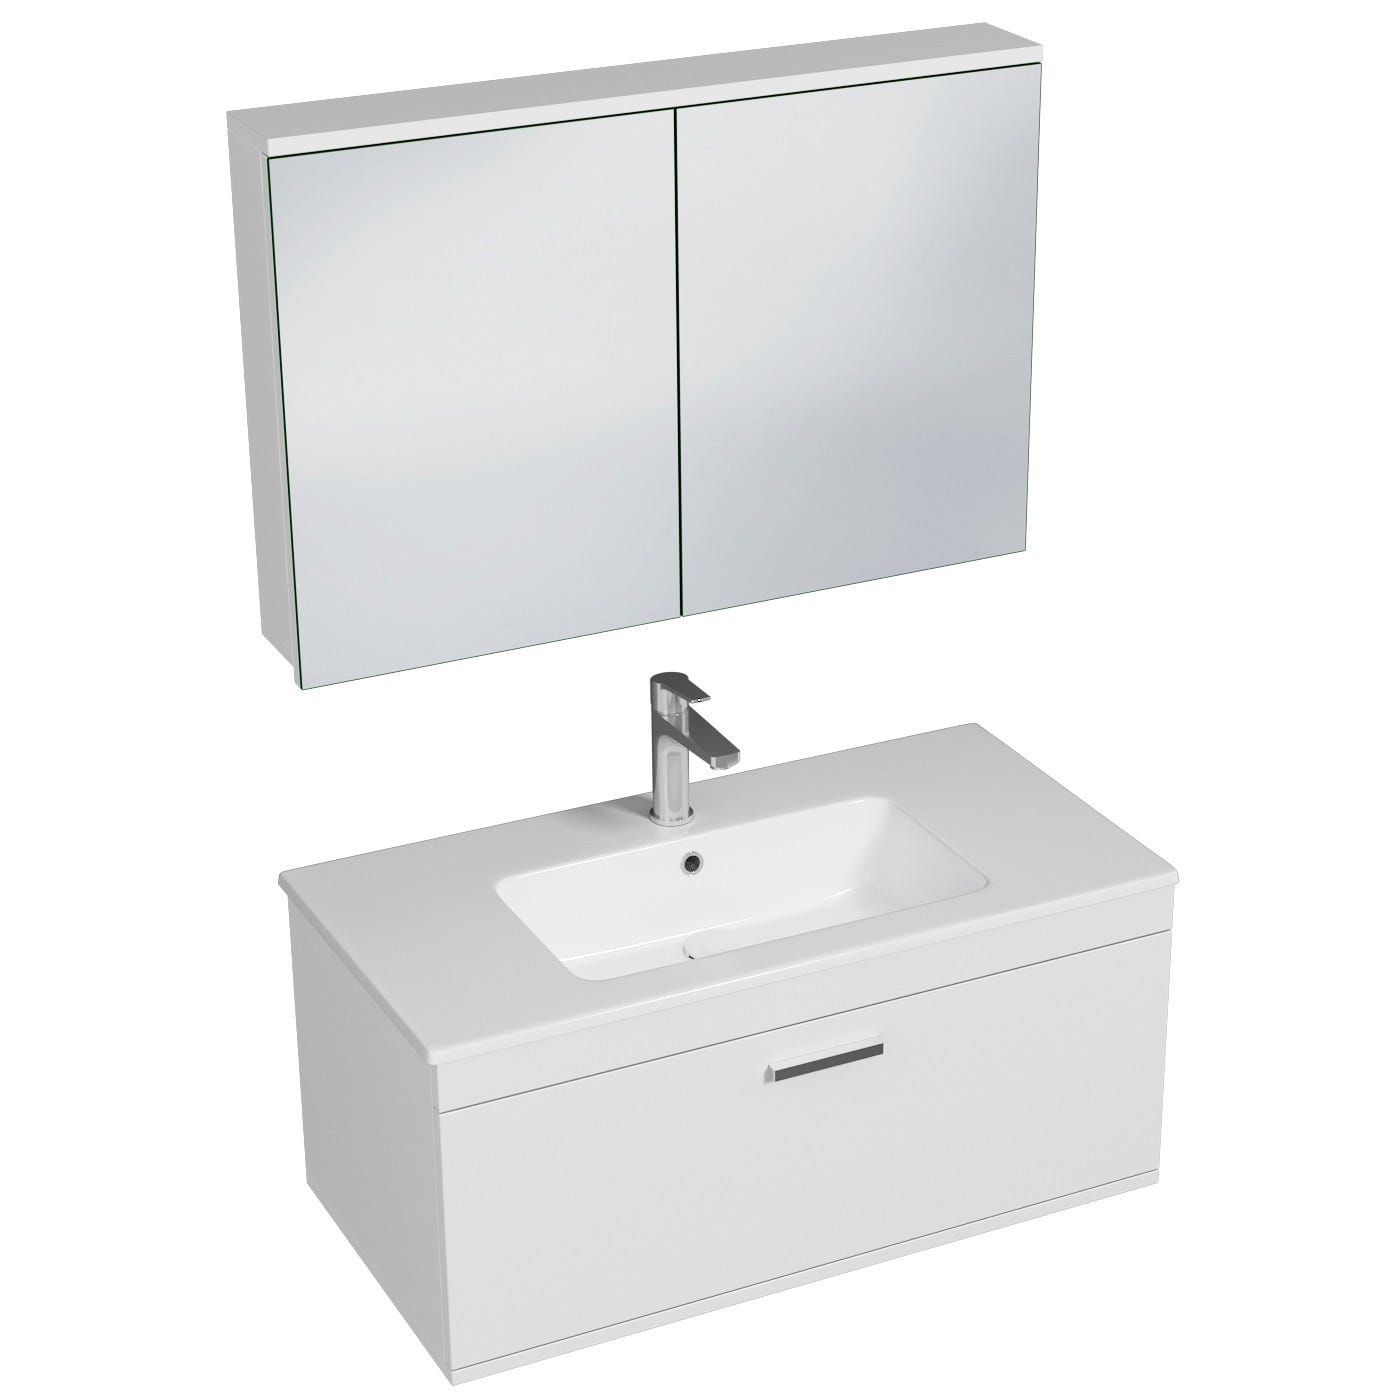 RUBITE Meuble salle de bain simple vasque 1 tiroir blanc largeur 100 cm + miroir armoire 0